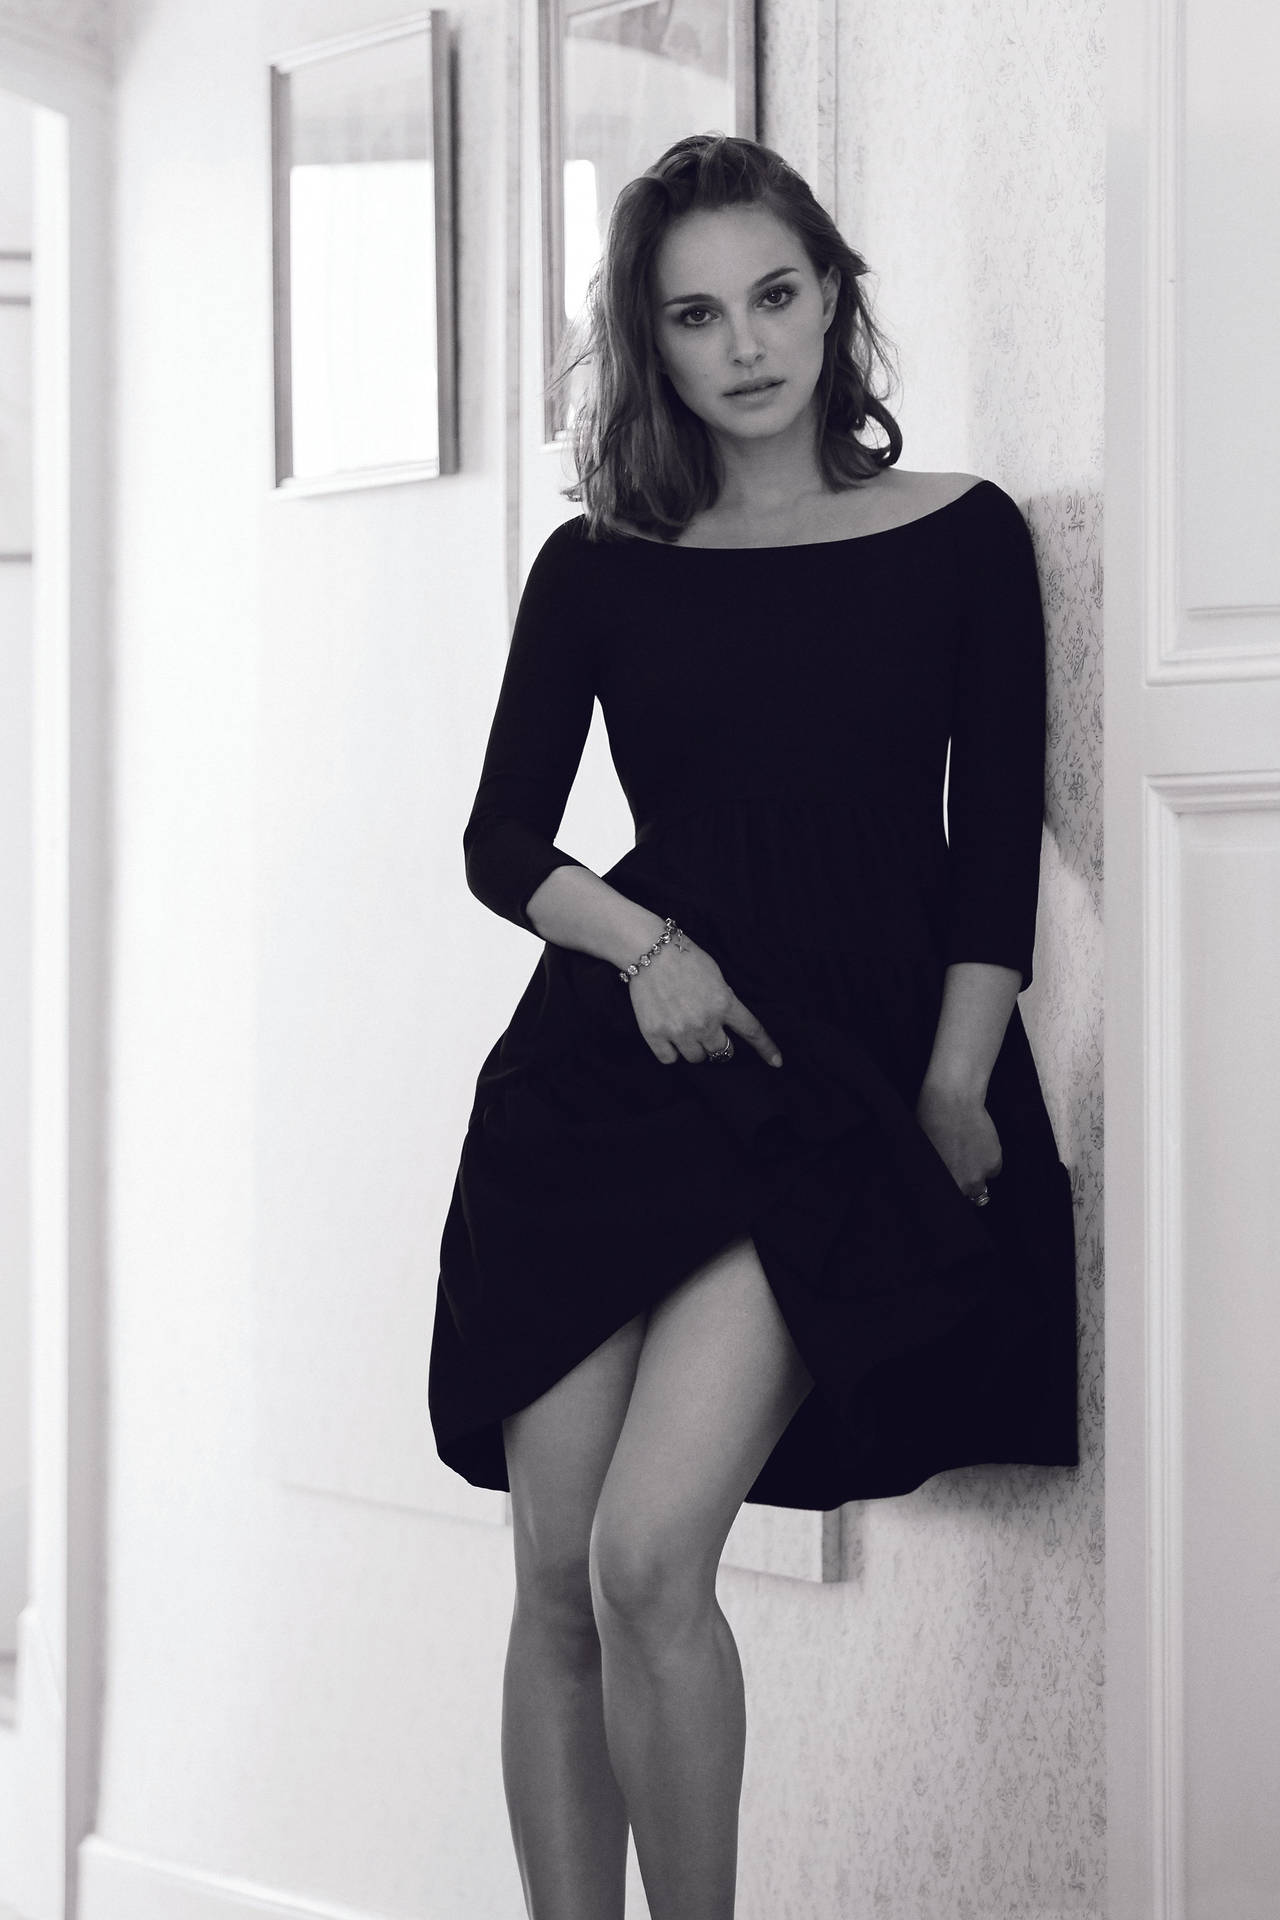 Smashing Image Of Natalie Portman Picture